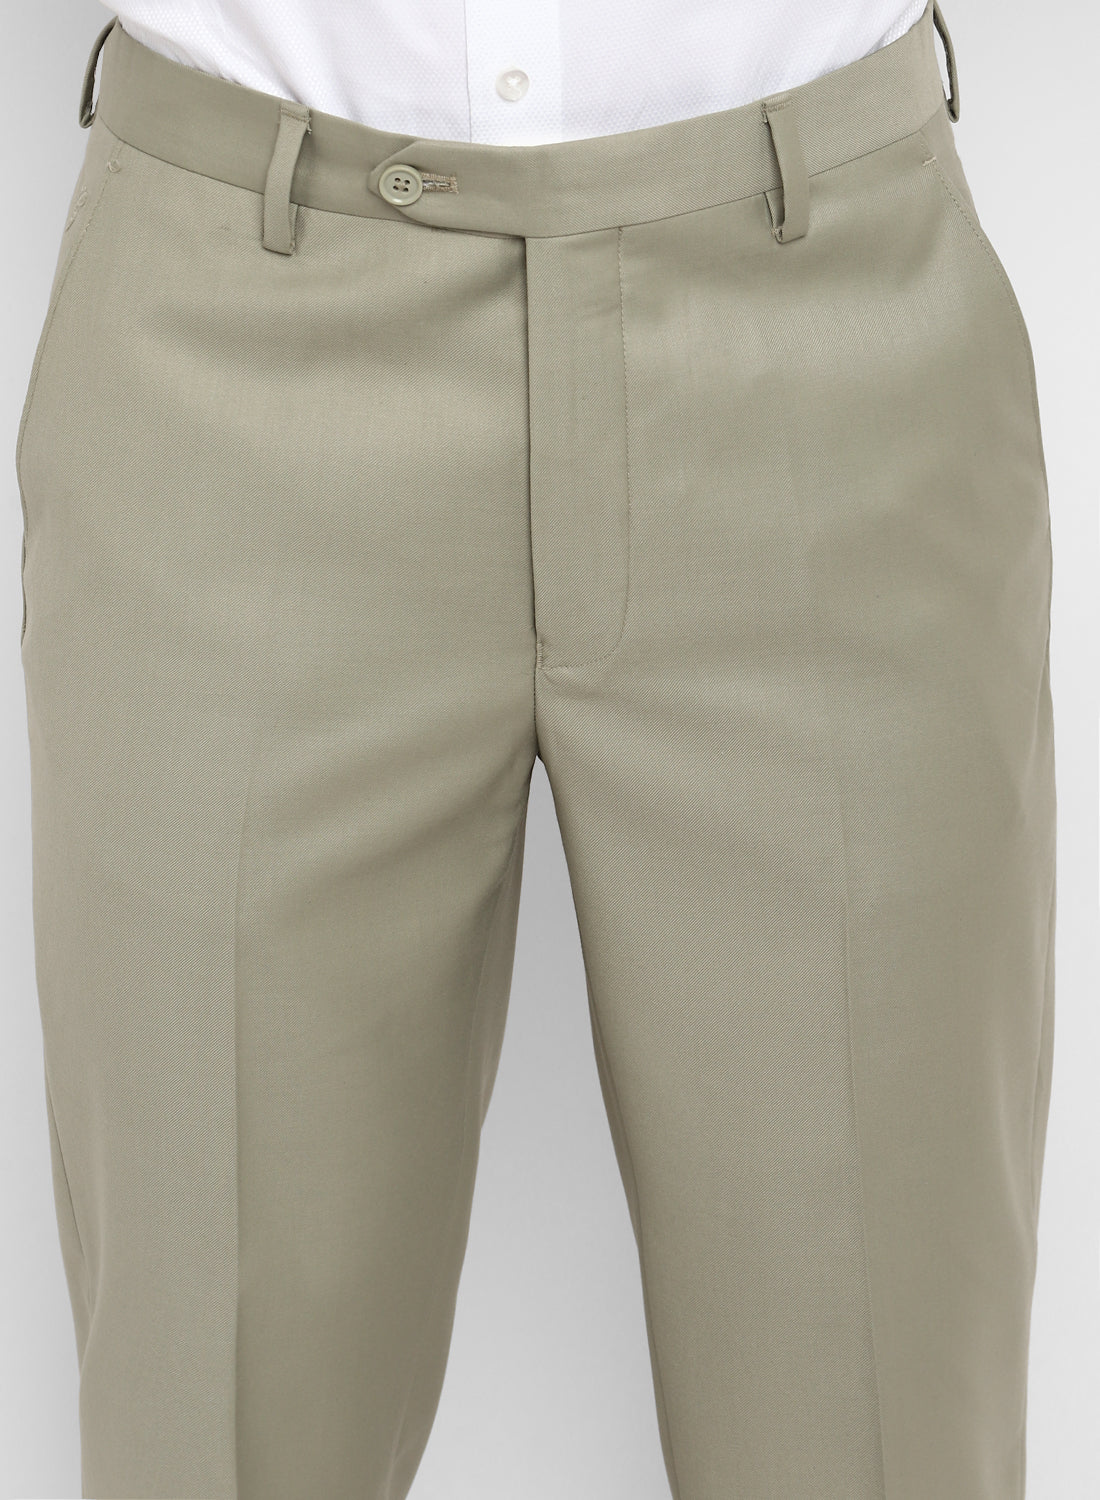 Men's pants & shorts